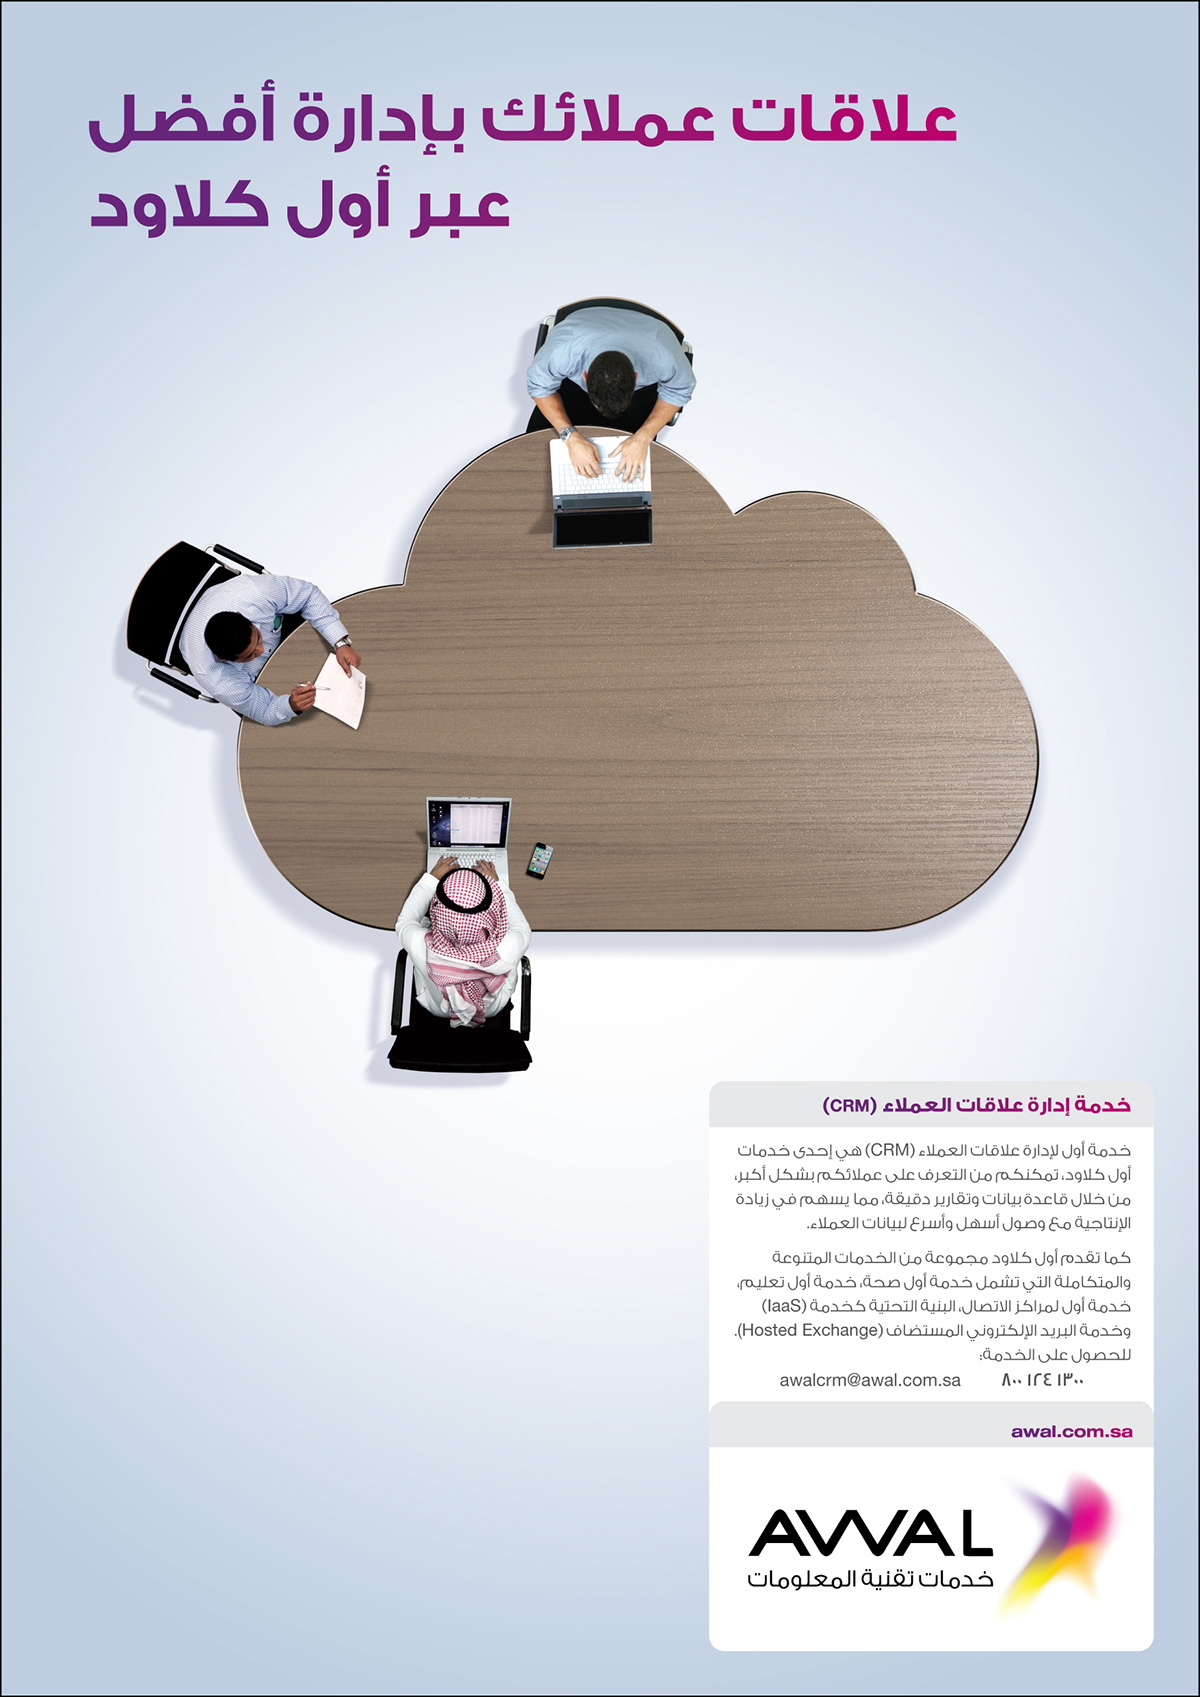 AWAL cloud computing cloud IT services IT stc